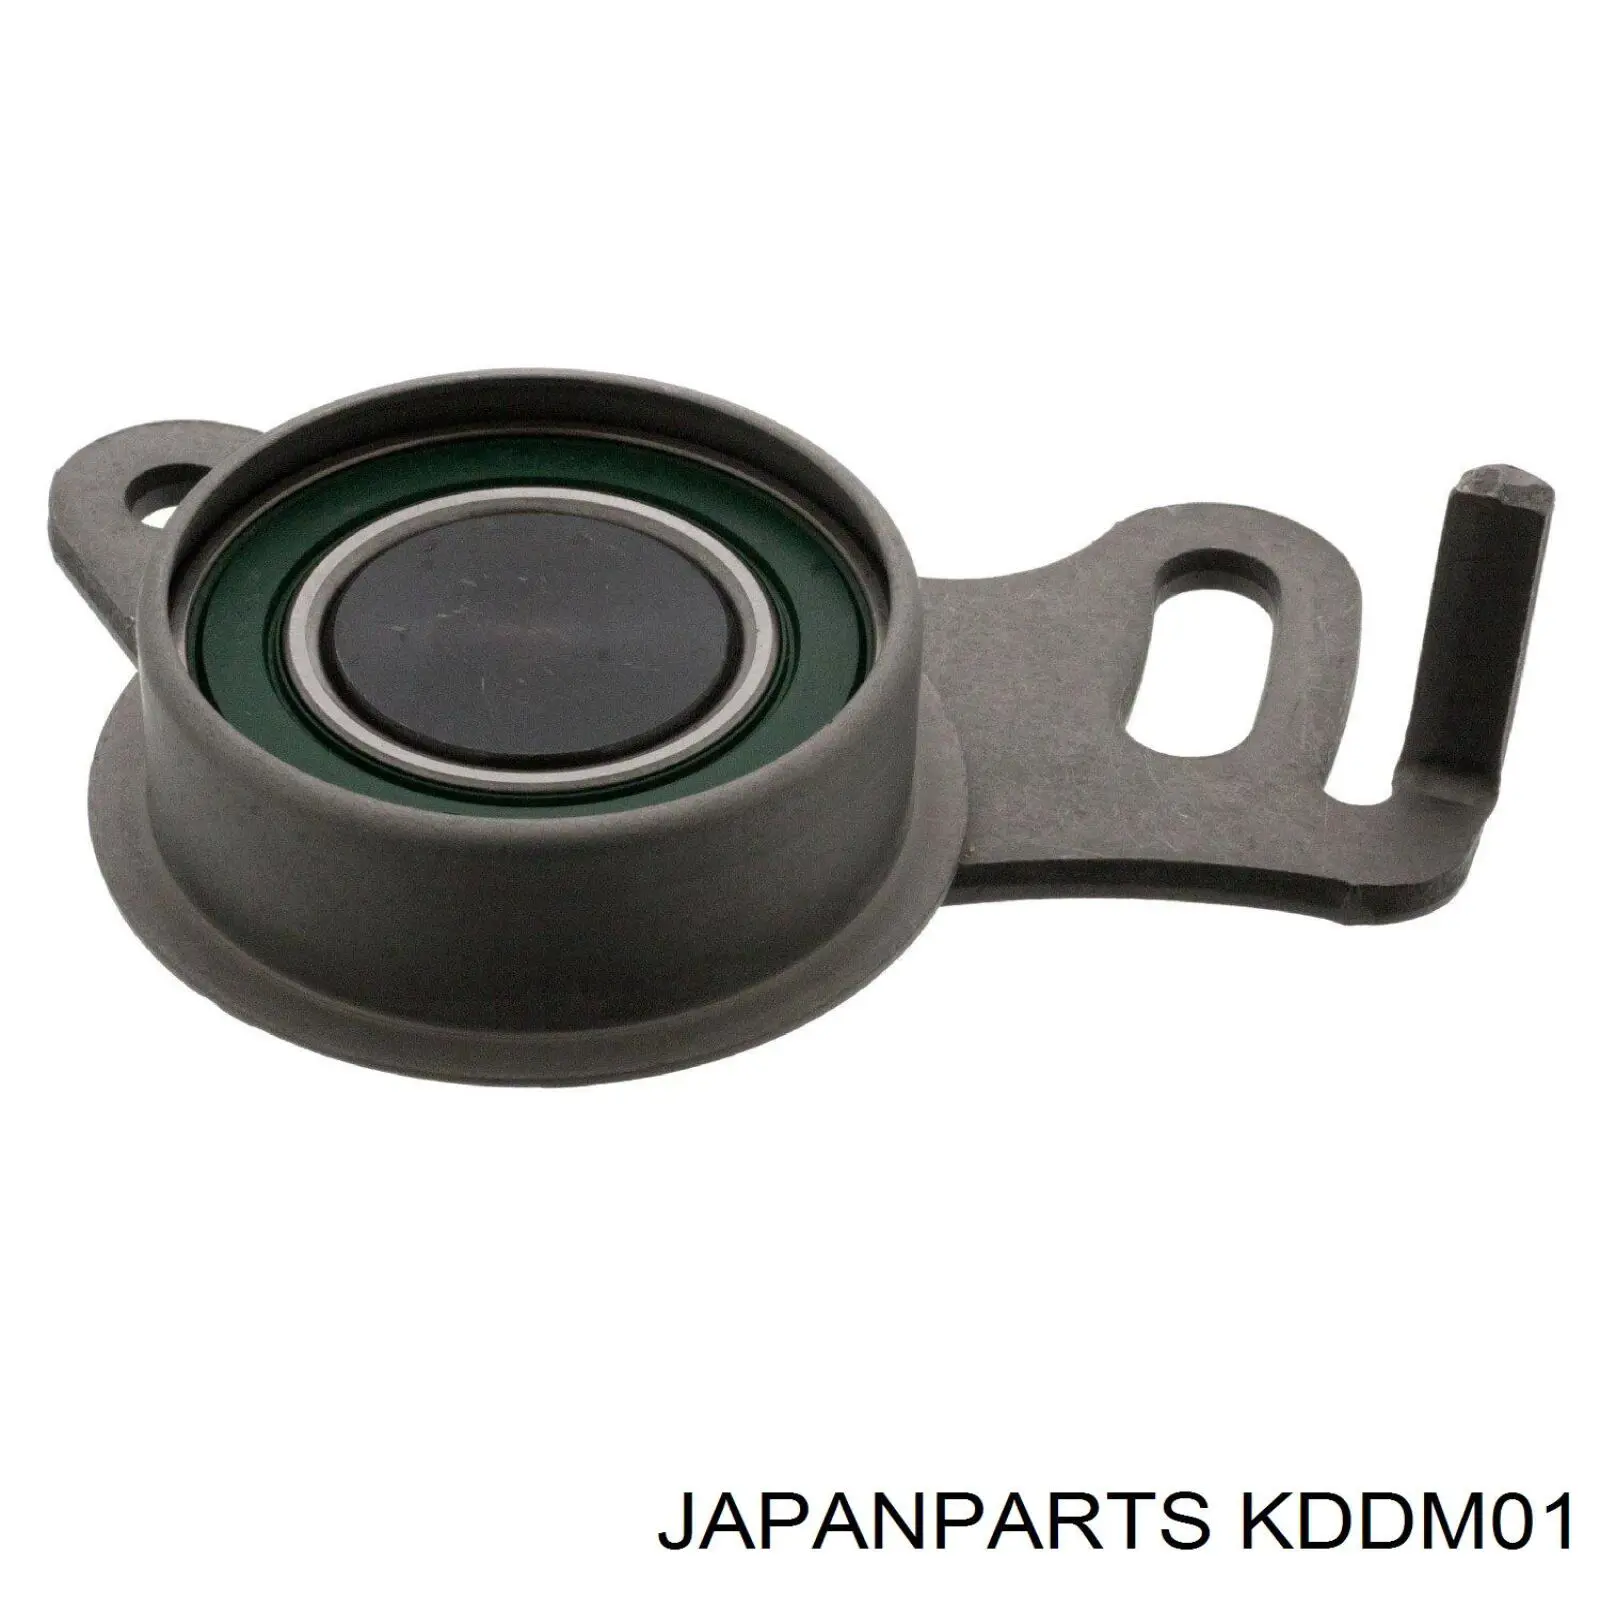 Ремень ГРМ Japan Parts KDDM01